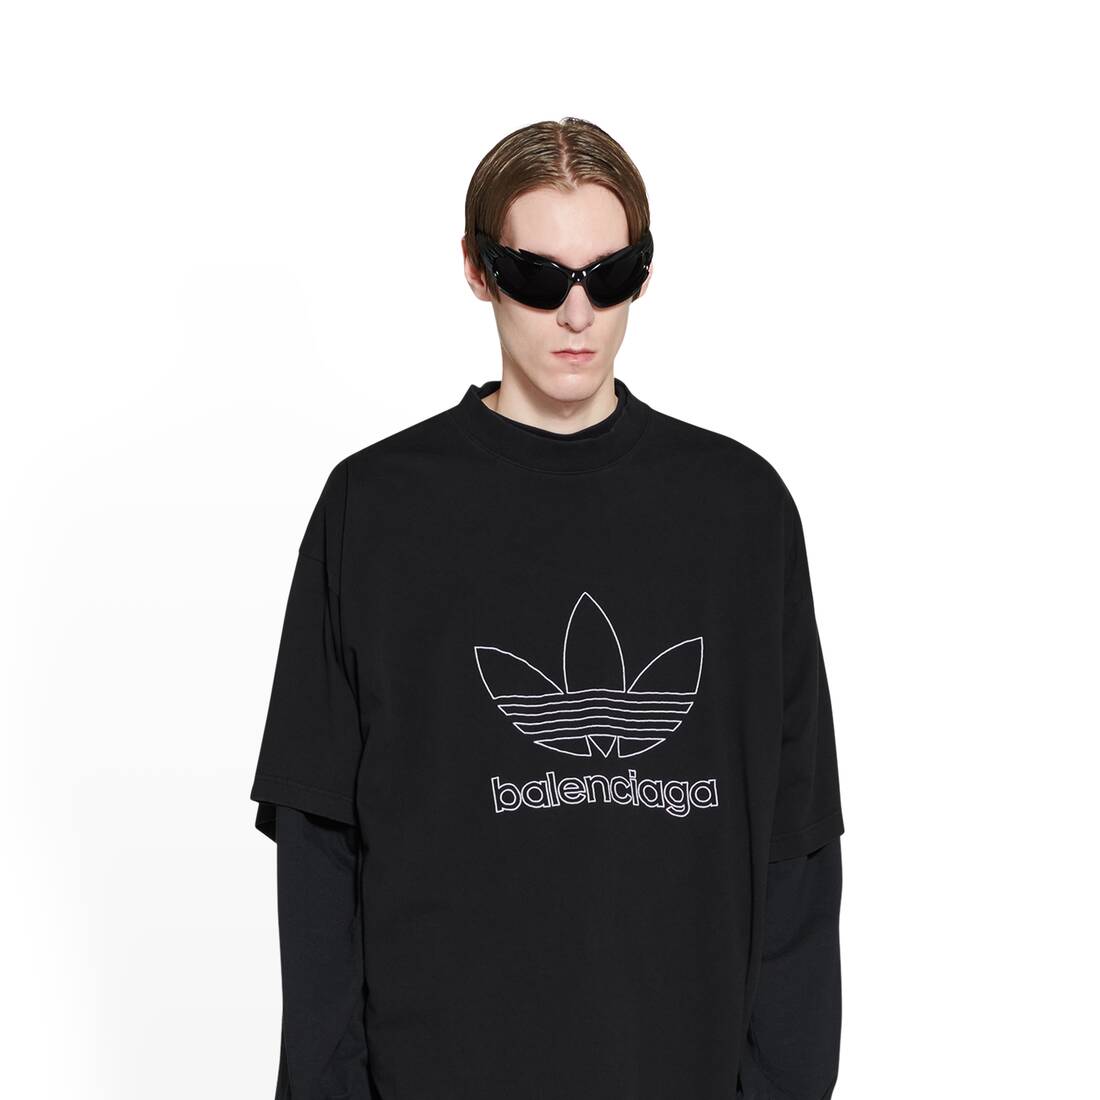 Balenciaga / Adidas T-shirt Oversized in Black